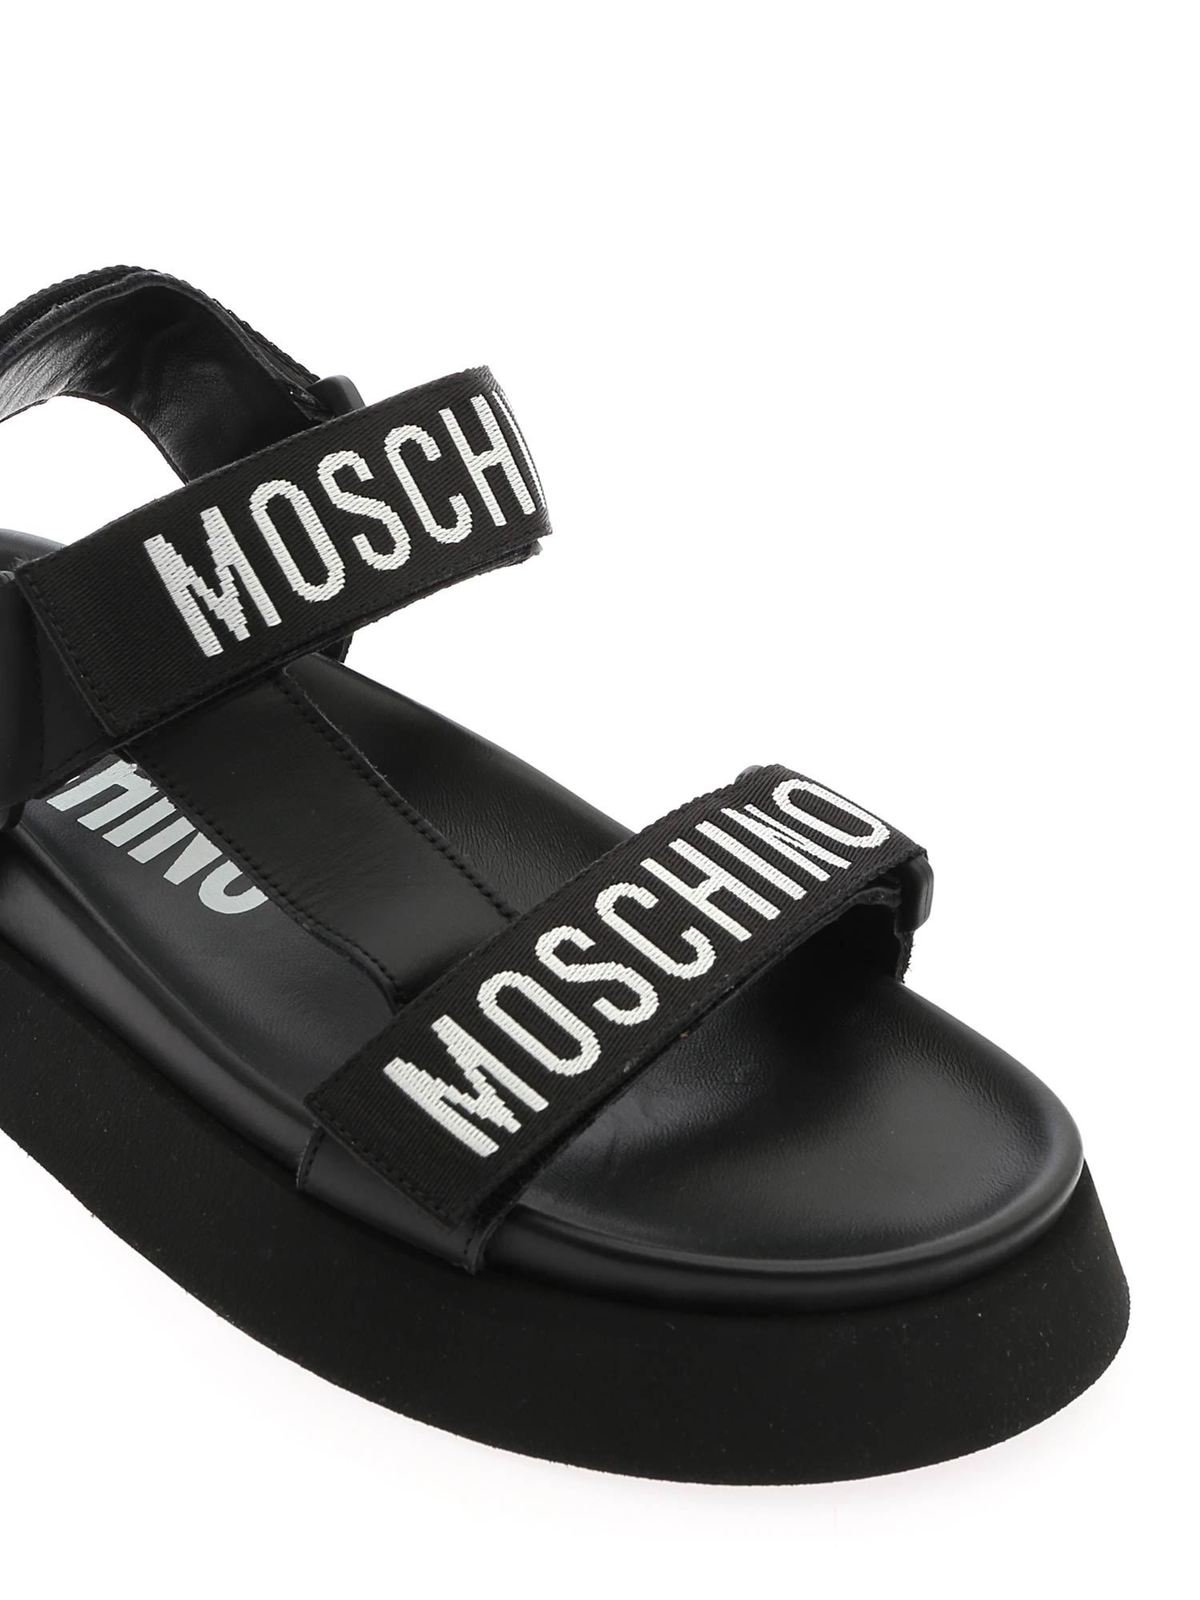 moschino sandals